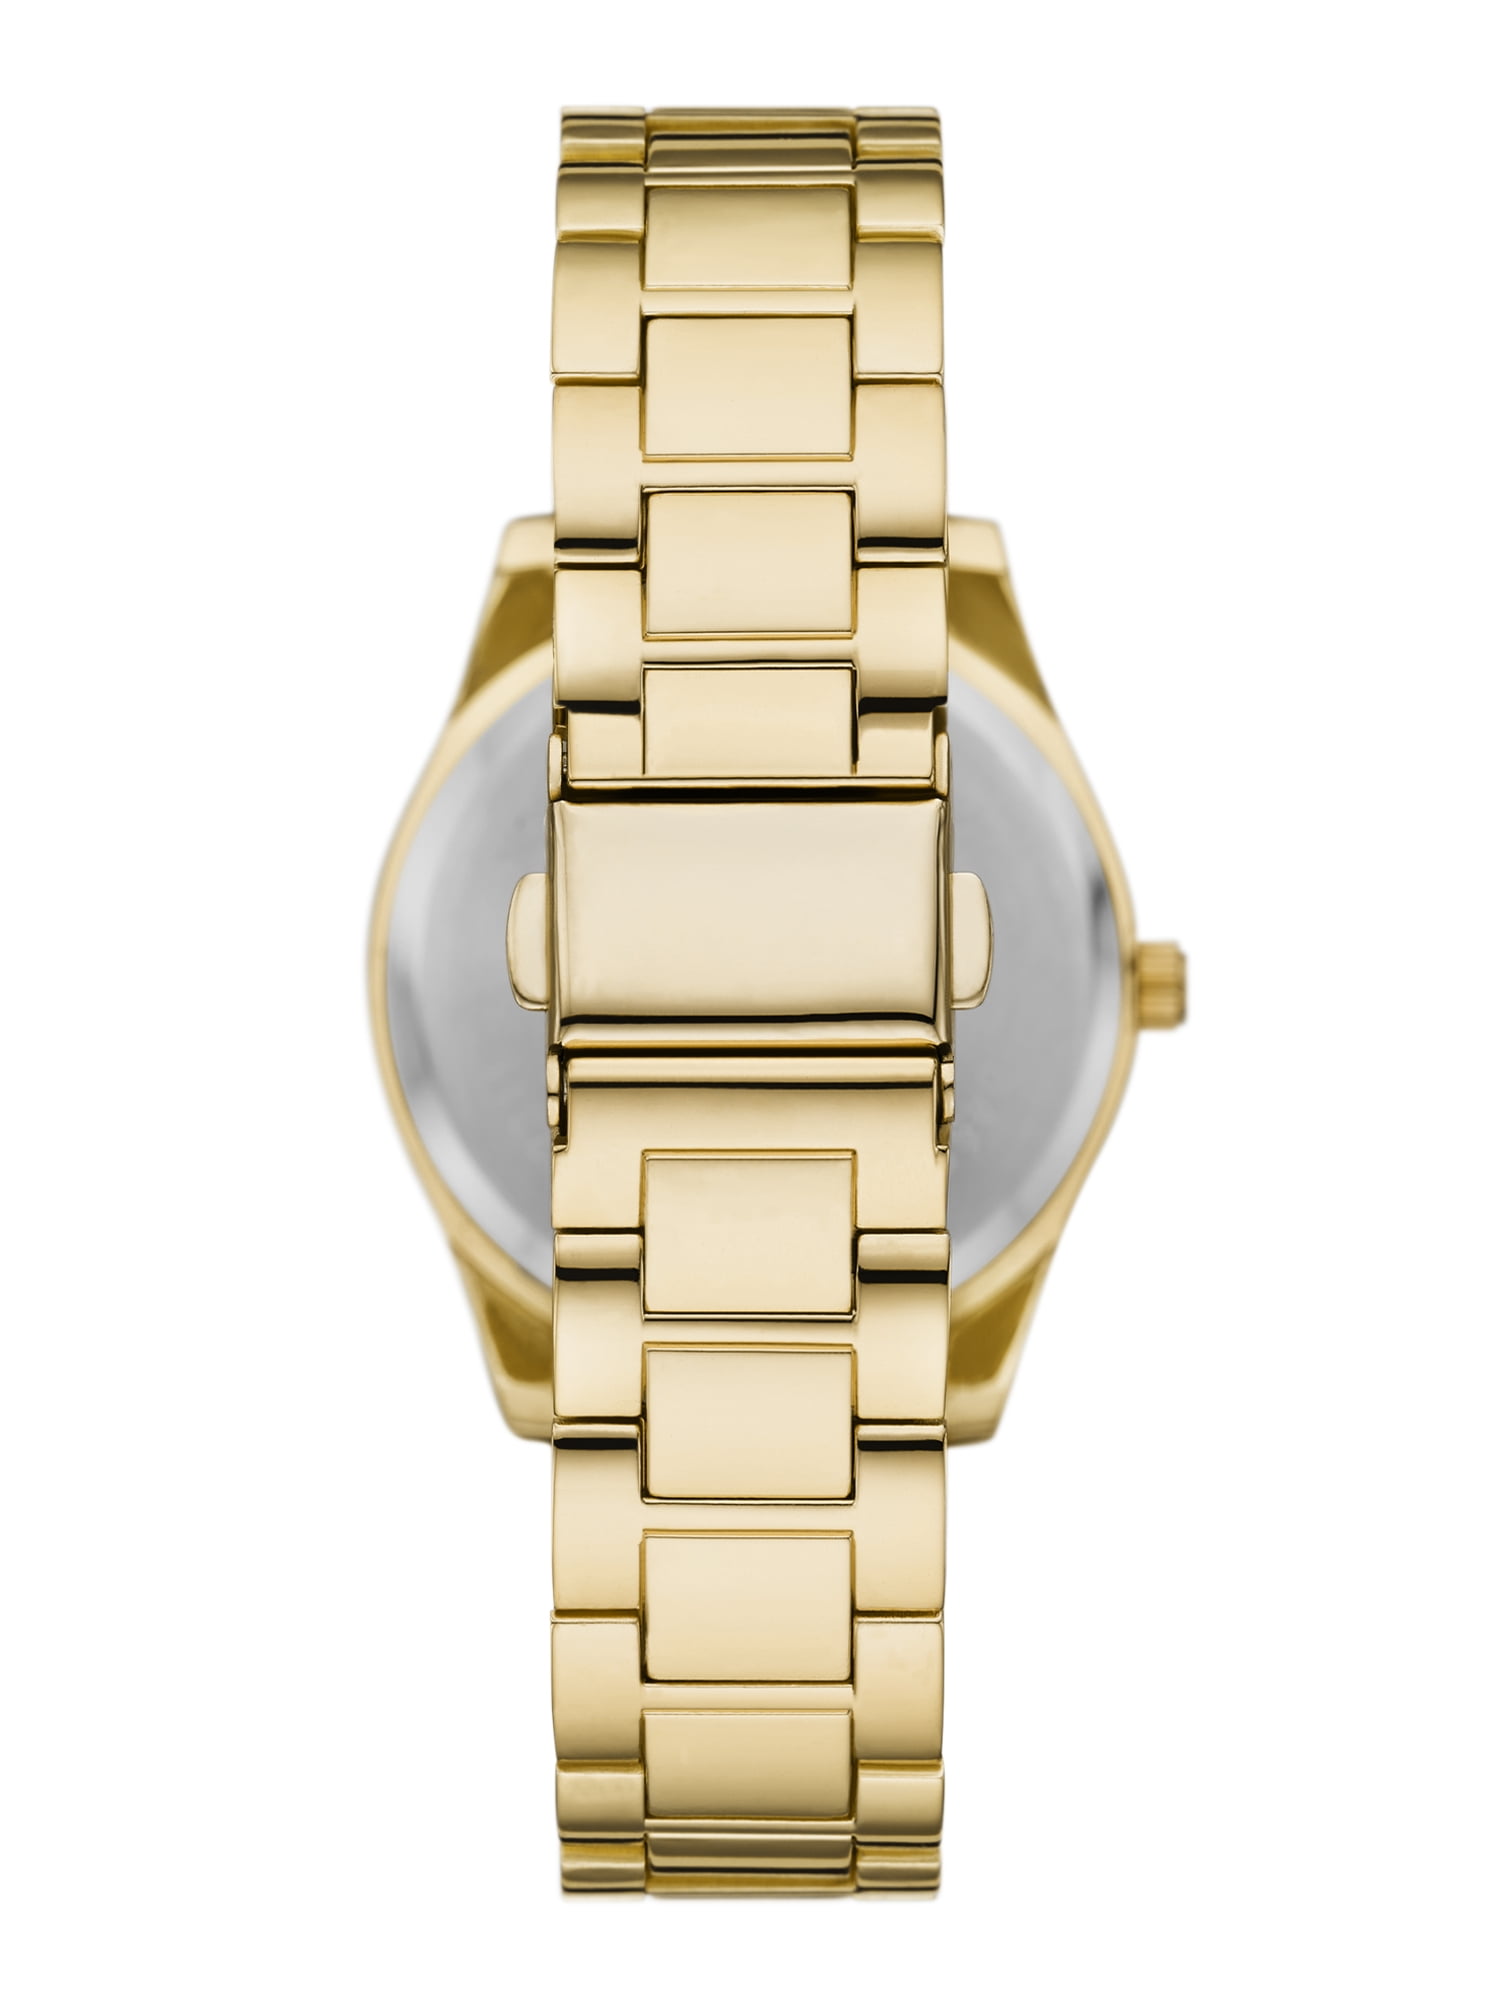 Folio Women's Watch Gift Set: Gold Round Case, Gold Sunray Dial